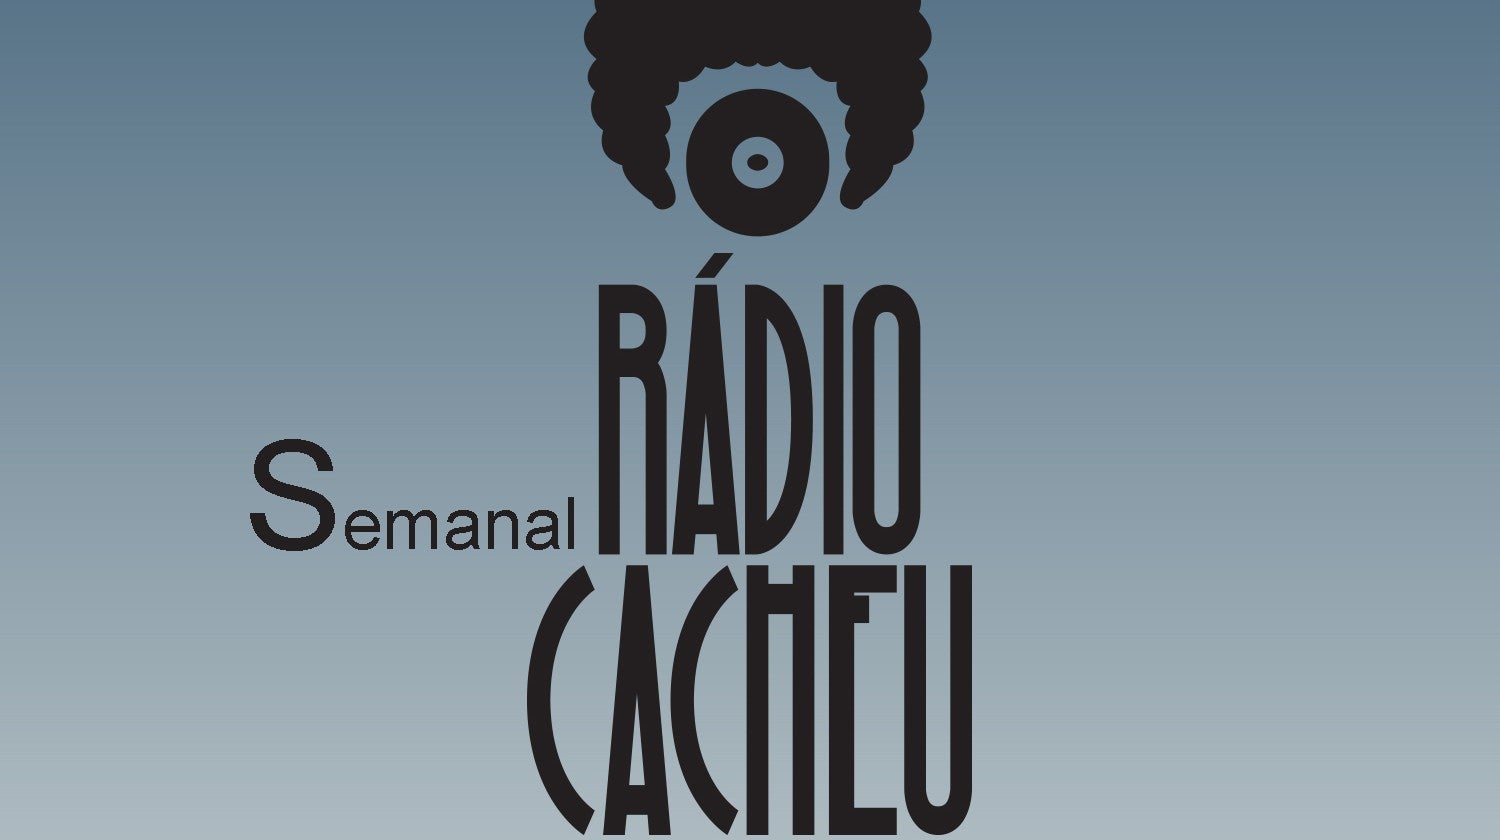 Rdio Cacheu - Semanal